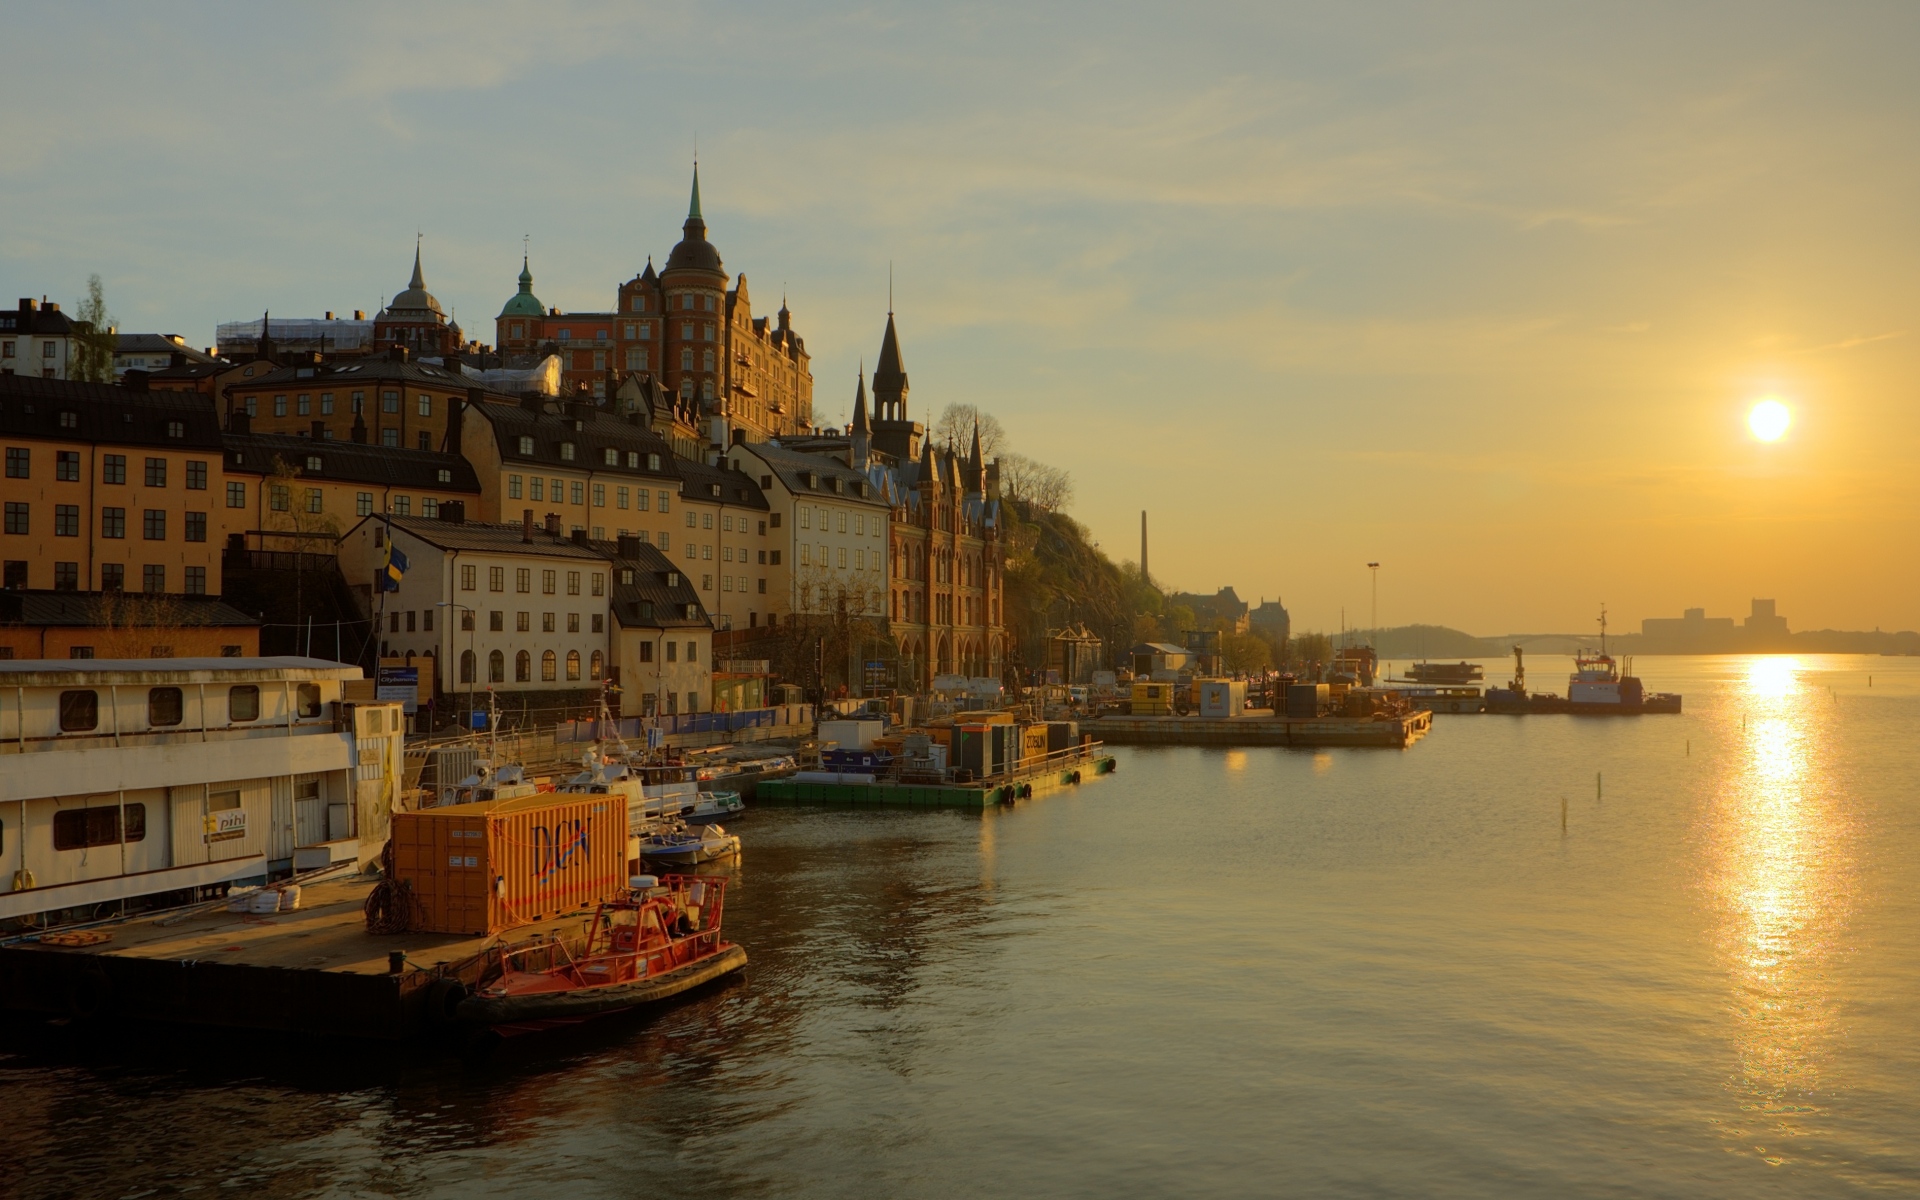 Картинки Швед, Стокгольм, набережная, река, солнце, трек, восход солнца, туман, золото, дома, башни, вода, лодка, отражение, небо фото и обои на рабочий стол